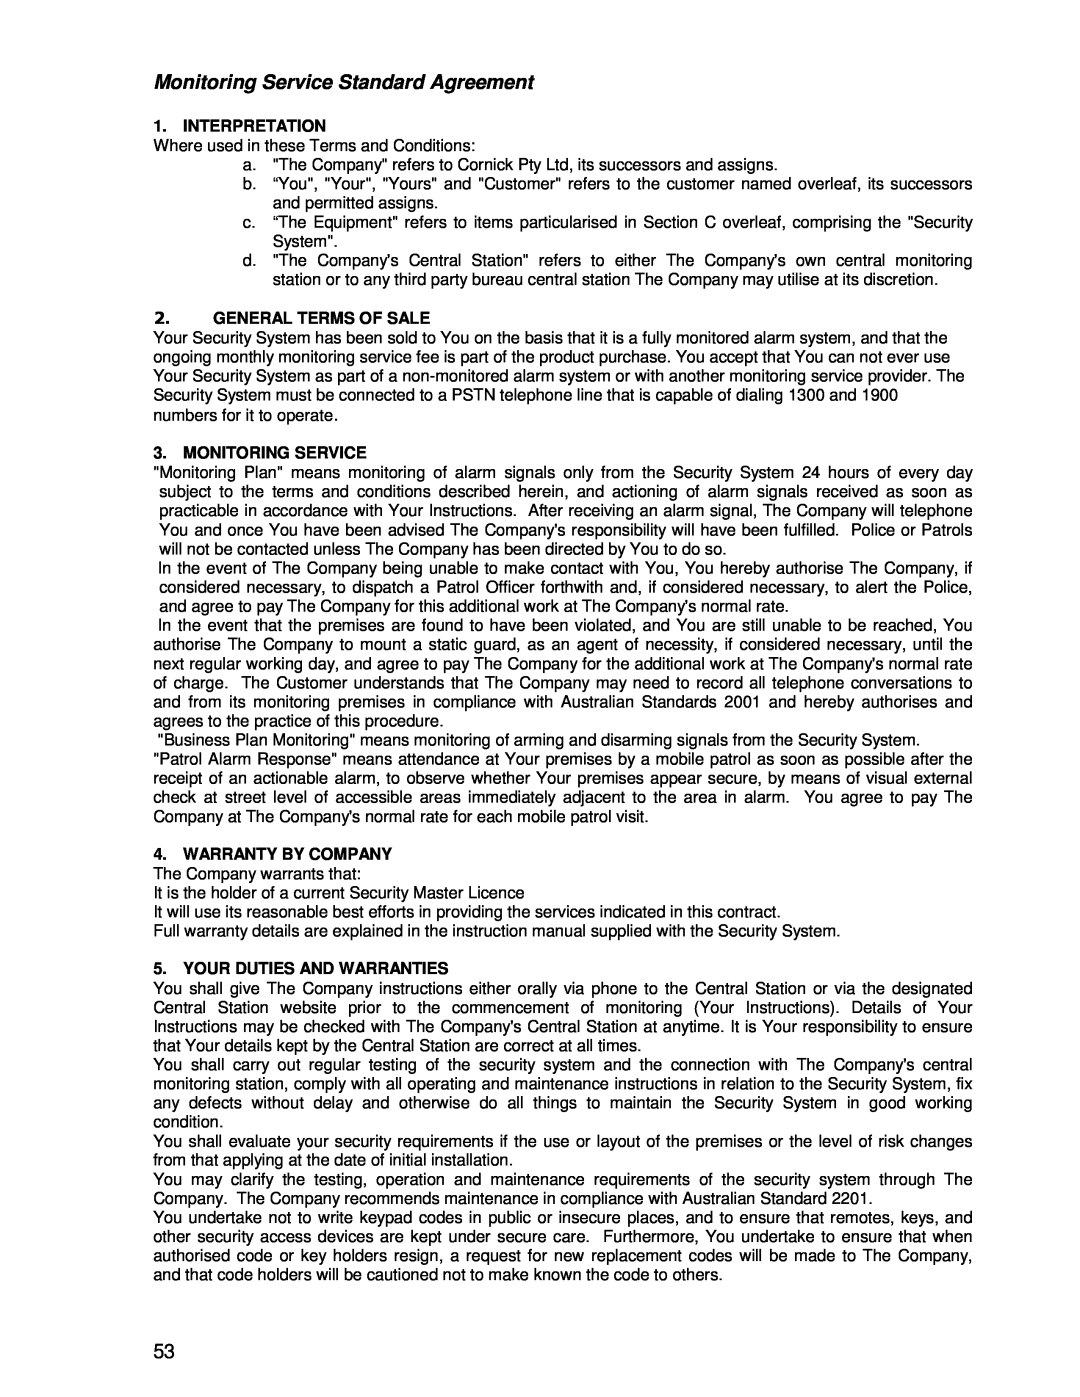 Ironman Fitness V2 instruction manual Monitoring Service Standard Agreement, Interpretation, General Terms Of Sale 